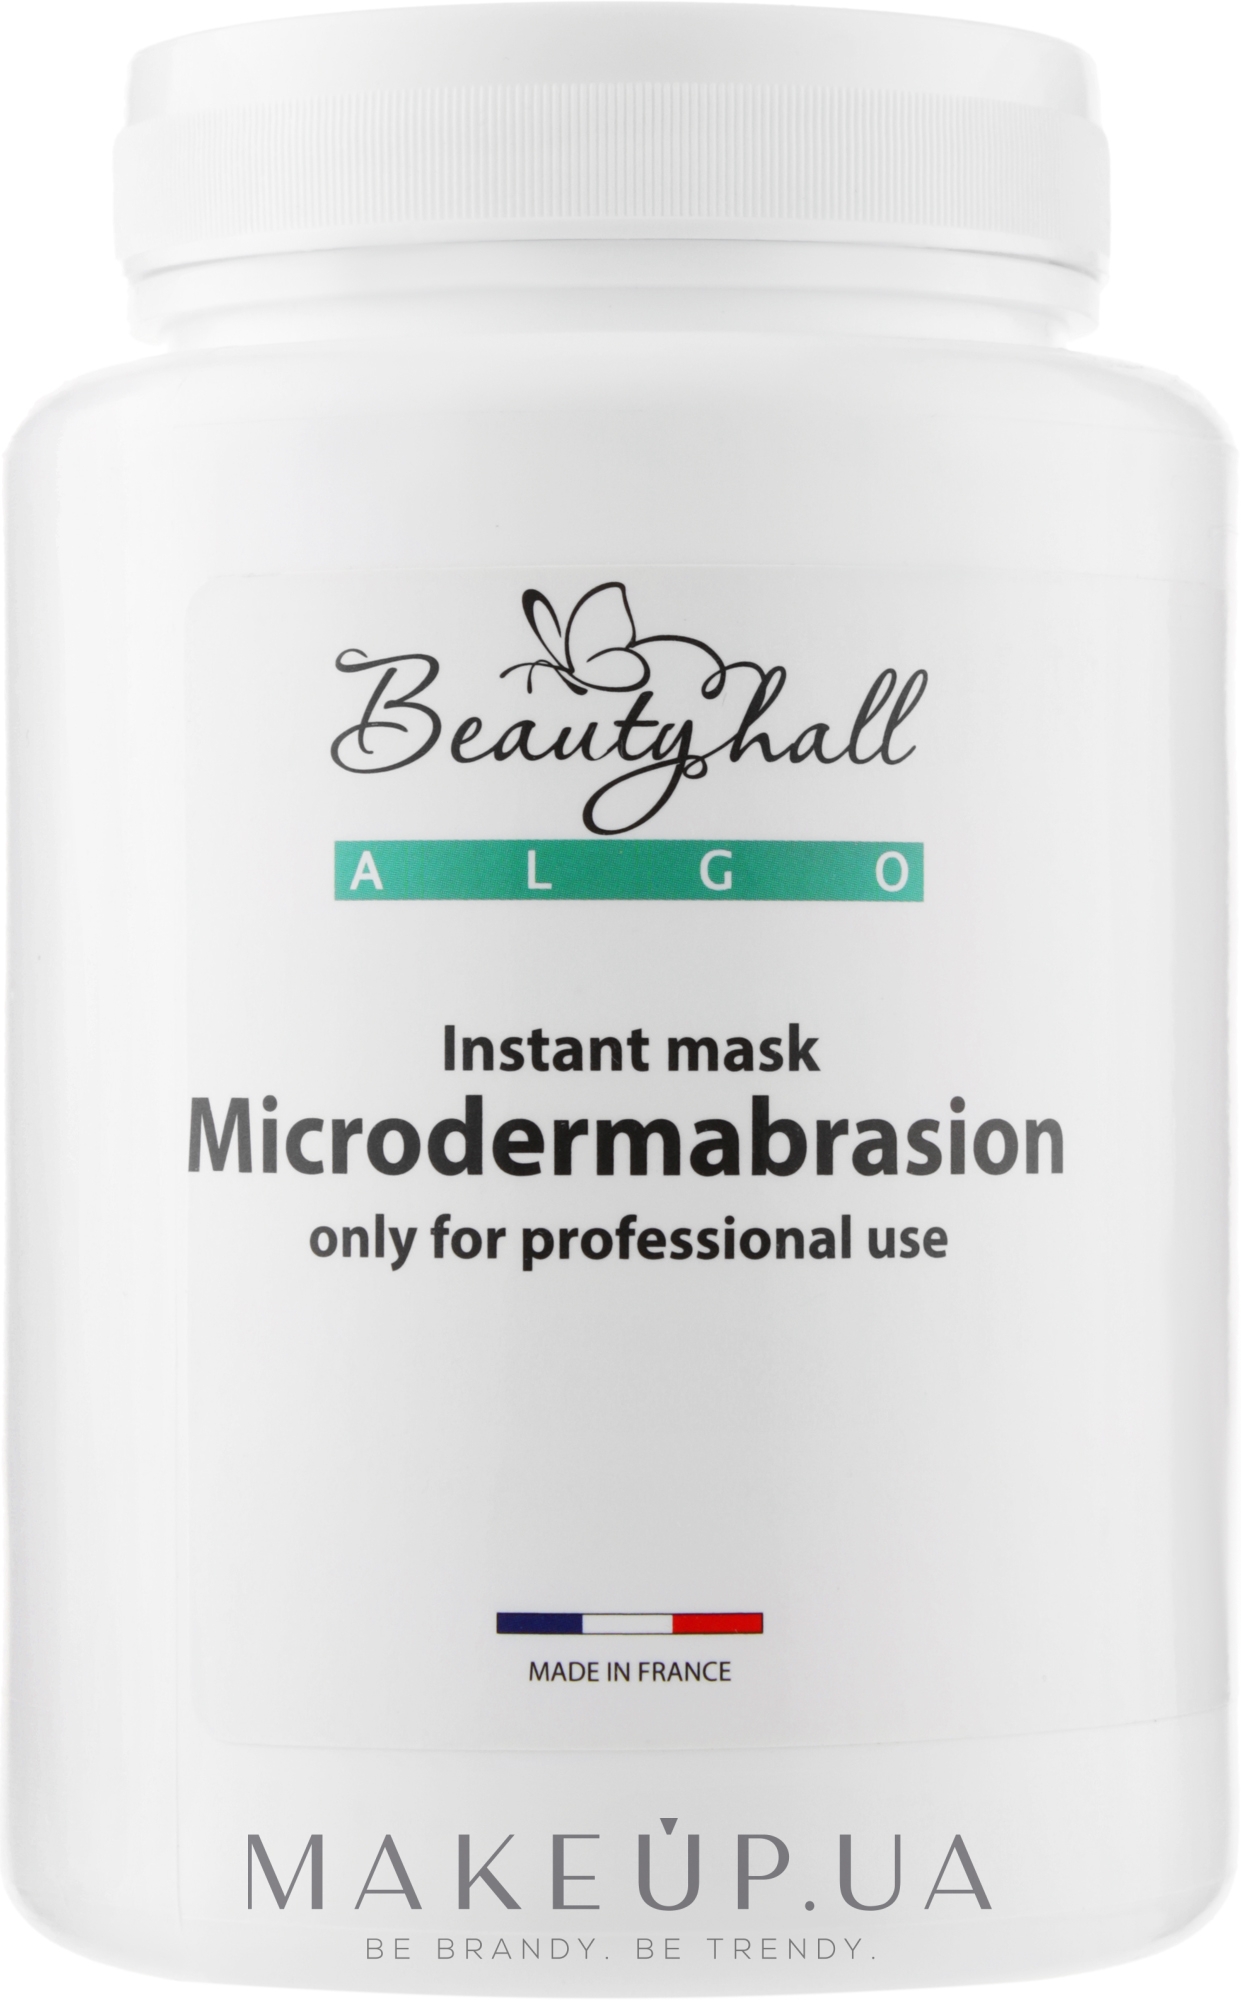 Кремова маска "Мікродермабразія" - Beautyhall Algo Instant Microdermabrasion Mask — фото 200g